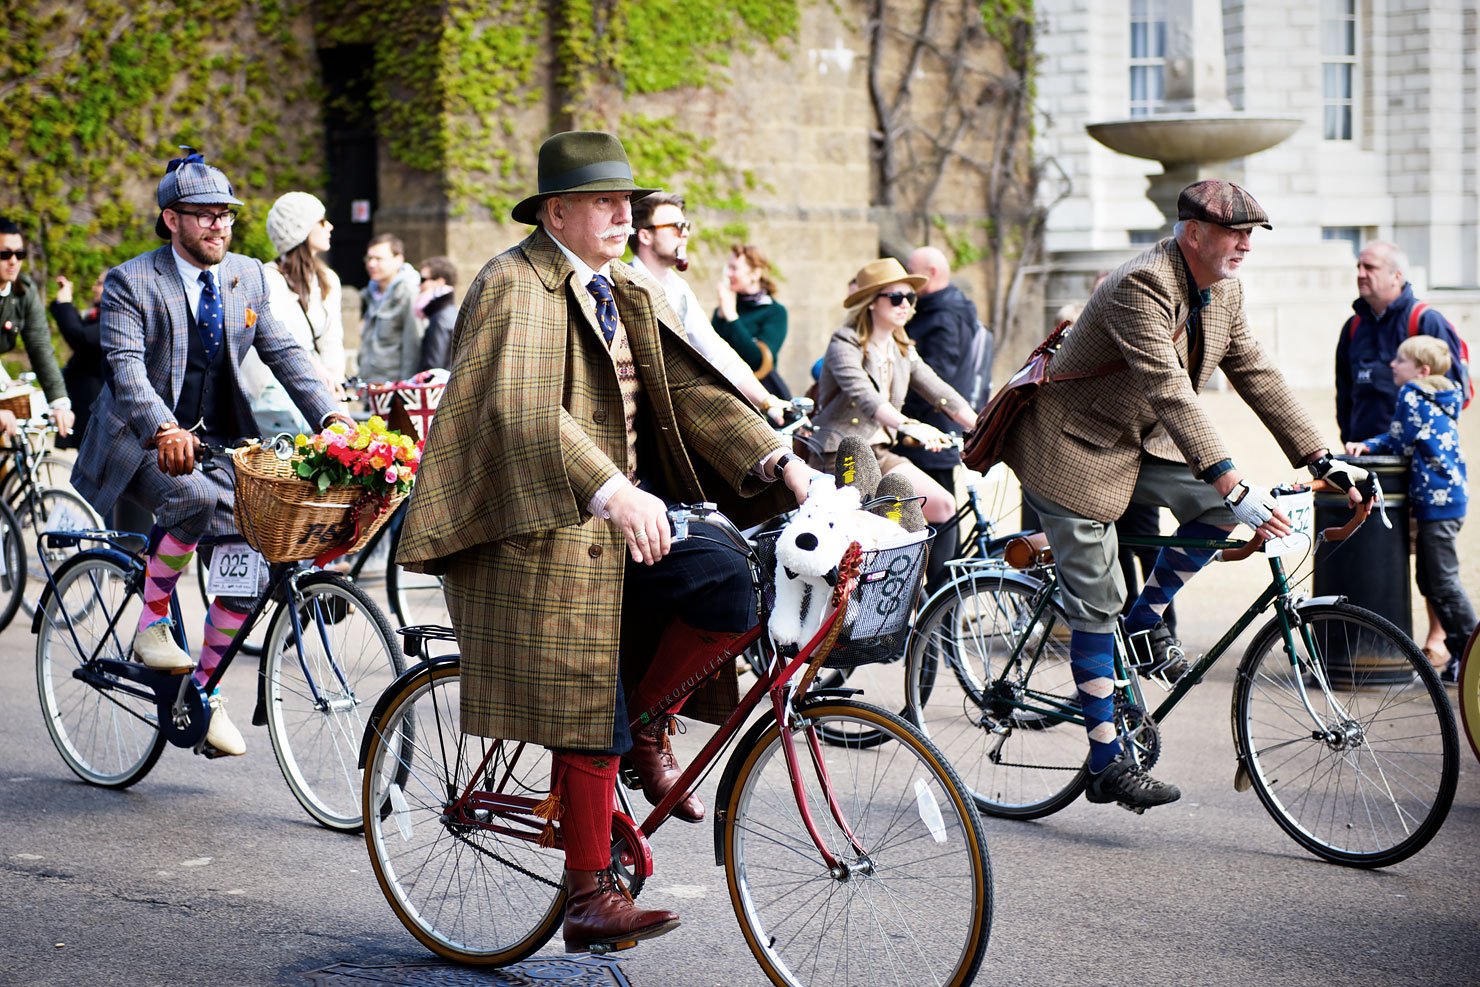 The Tweed Run London 2015: London's most stylish bike ride